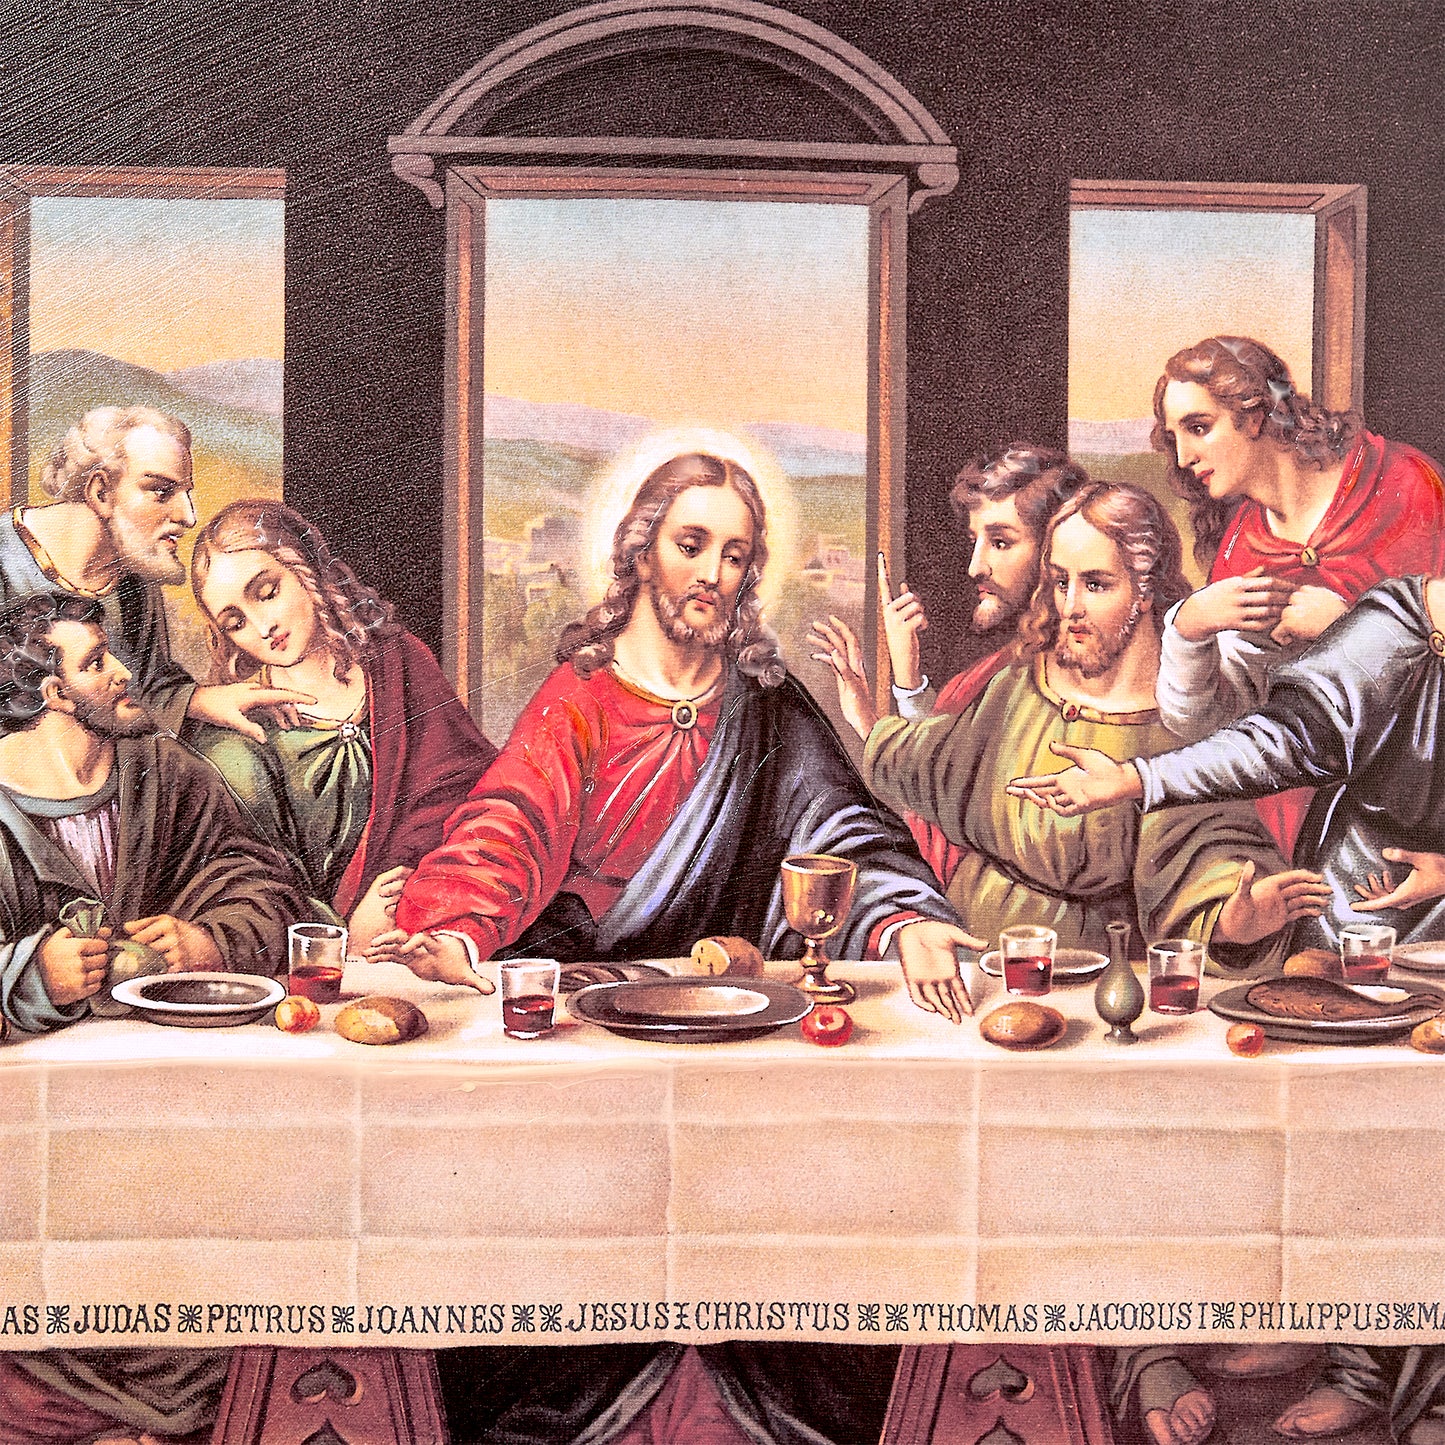 Ornate Framed The Last Supper Canvas Print by Leonardo da Vinci 31.5" x 27.62"